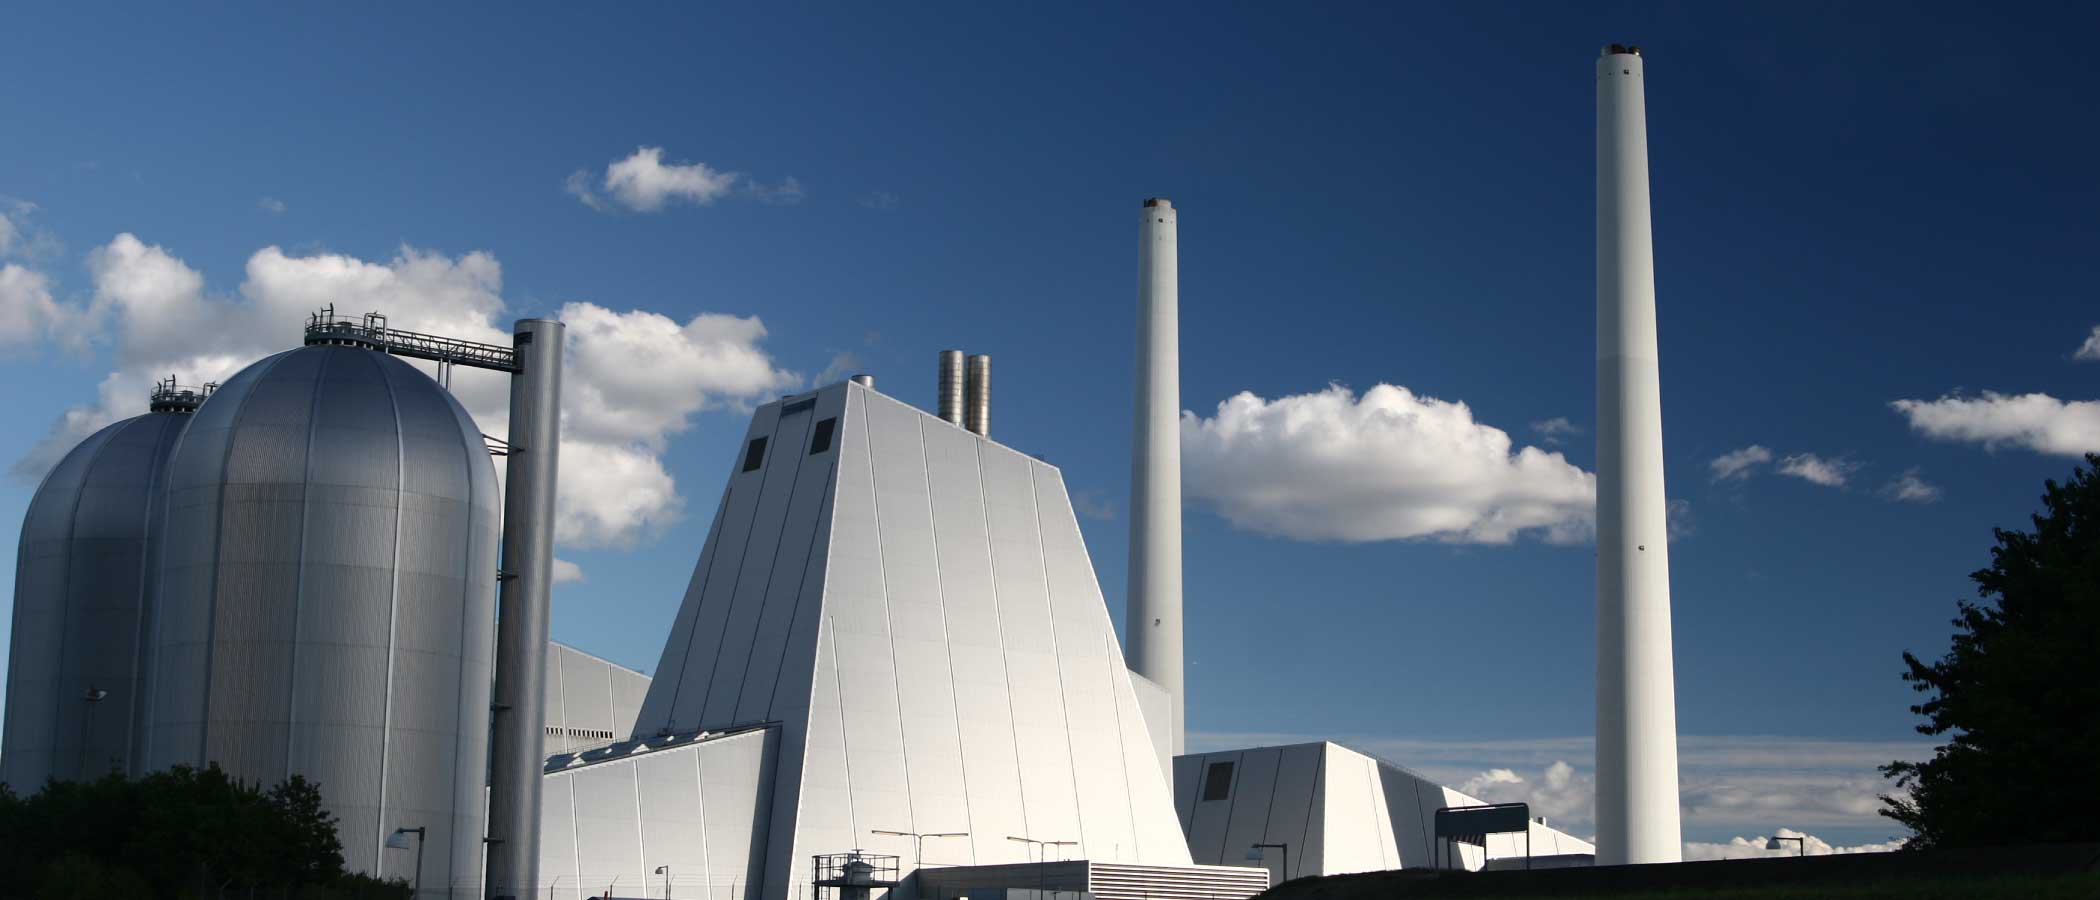 A modern power plant